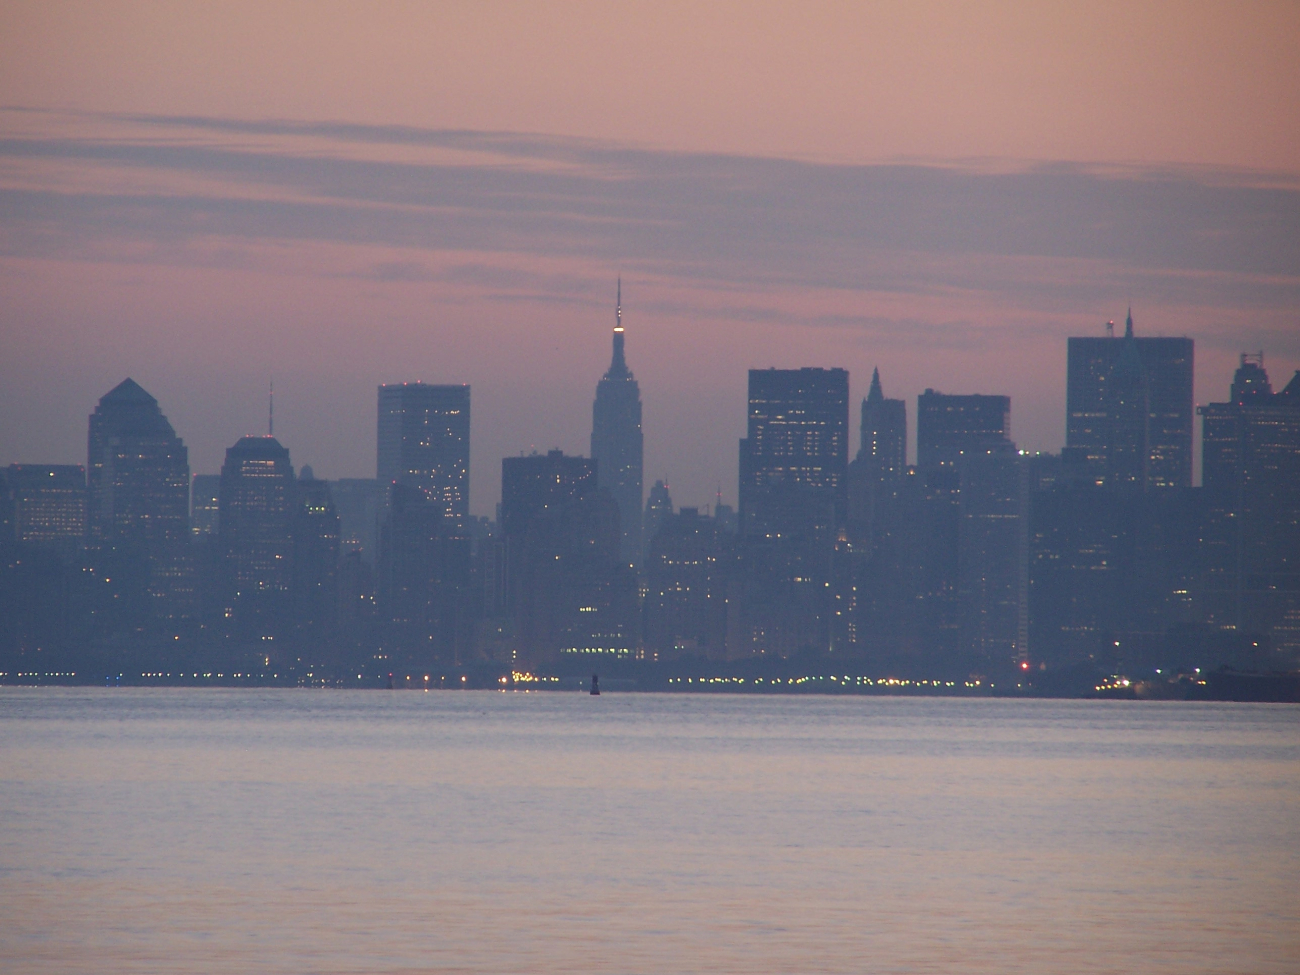 The skyline of New York City on a hazy evening